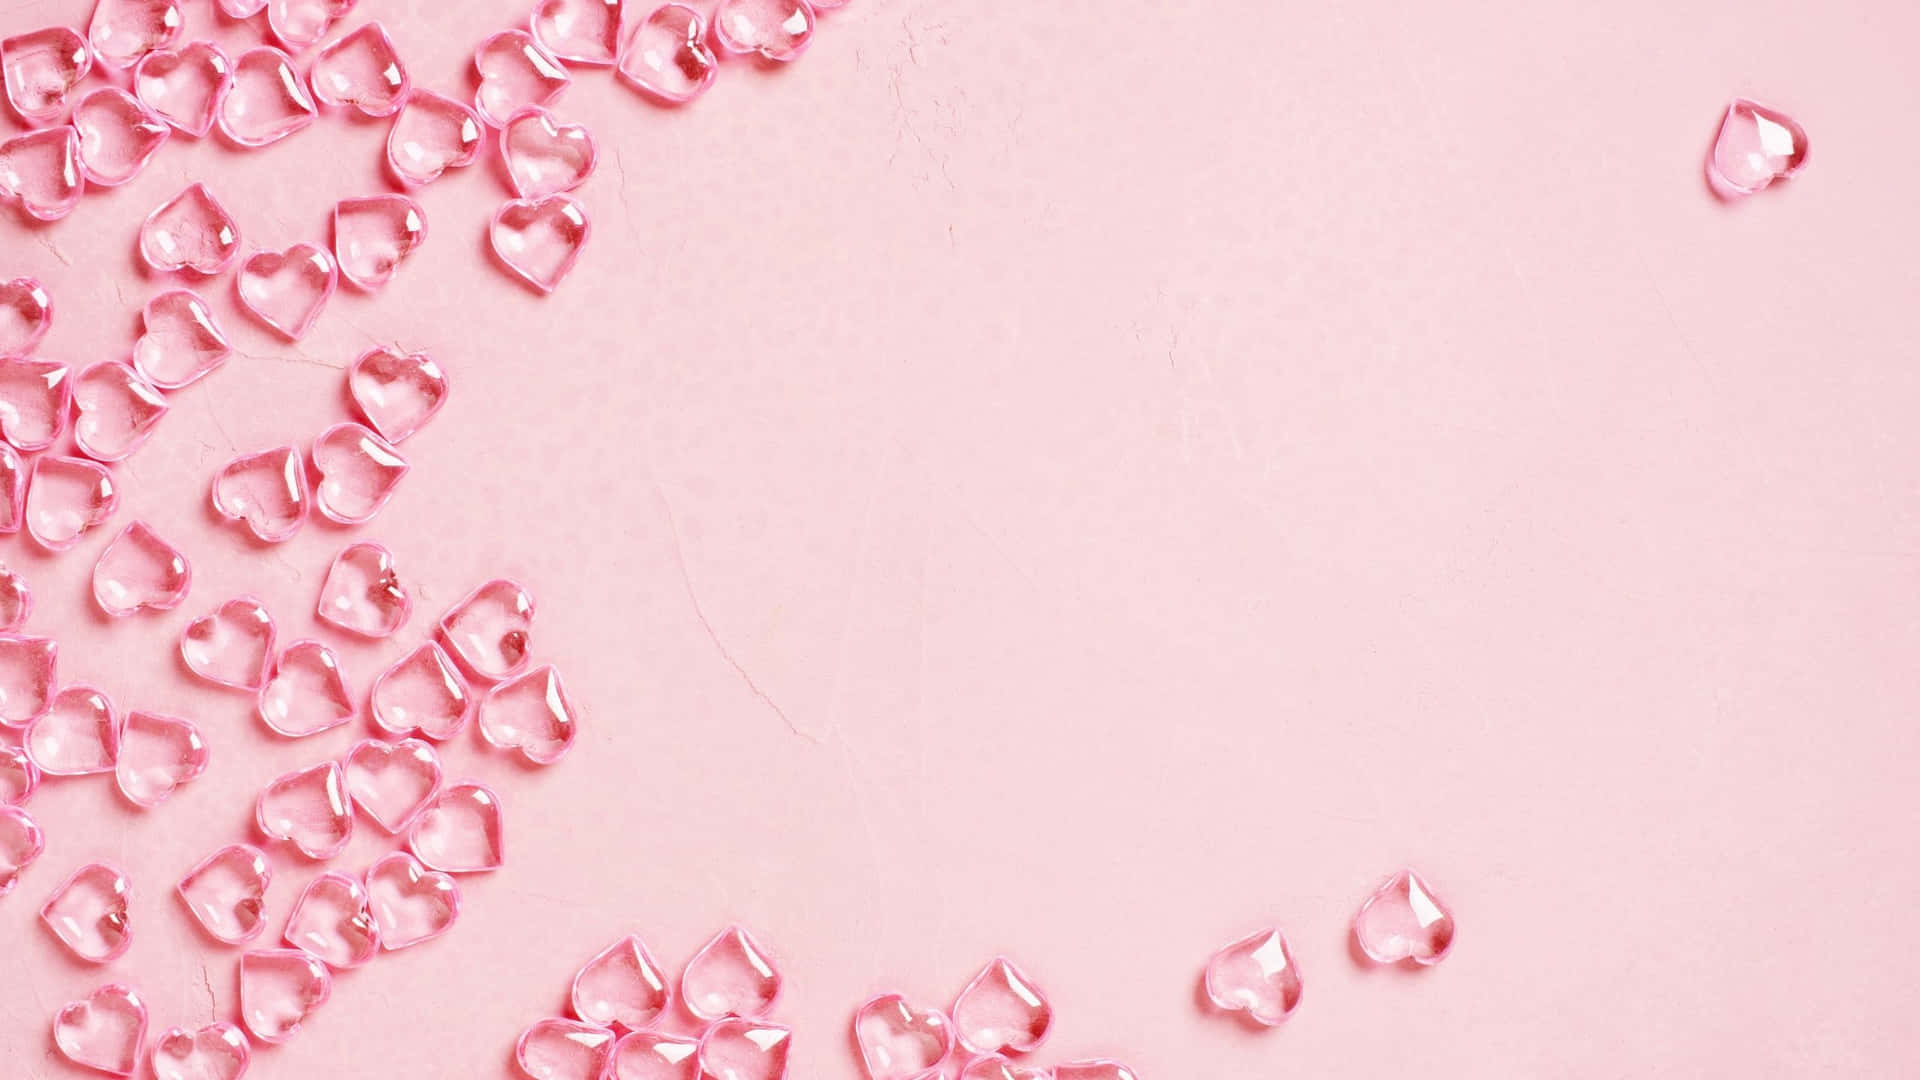 HOT PINK WALLPAPER AESTHETIC | Hot pink wallpaper, Love pink wallpaper, Pink  wallpaper iphone